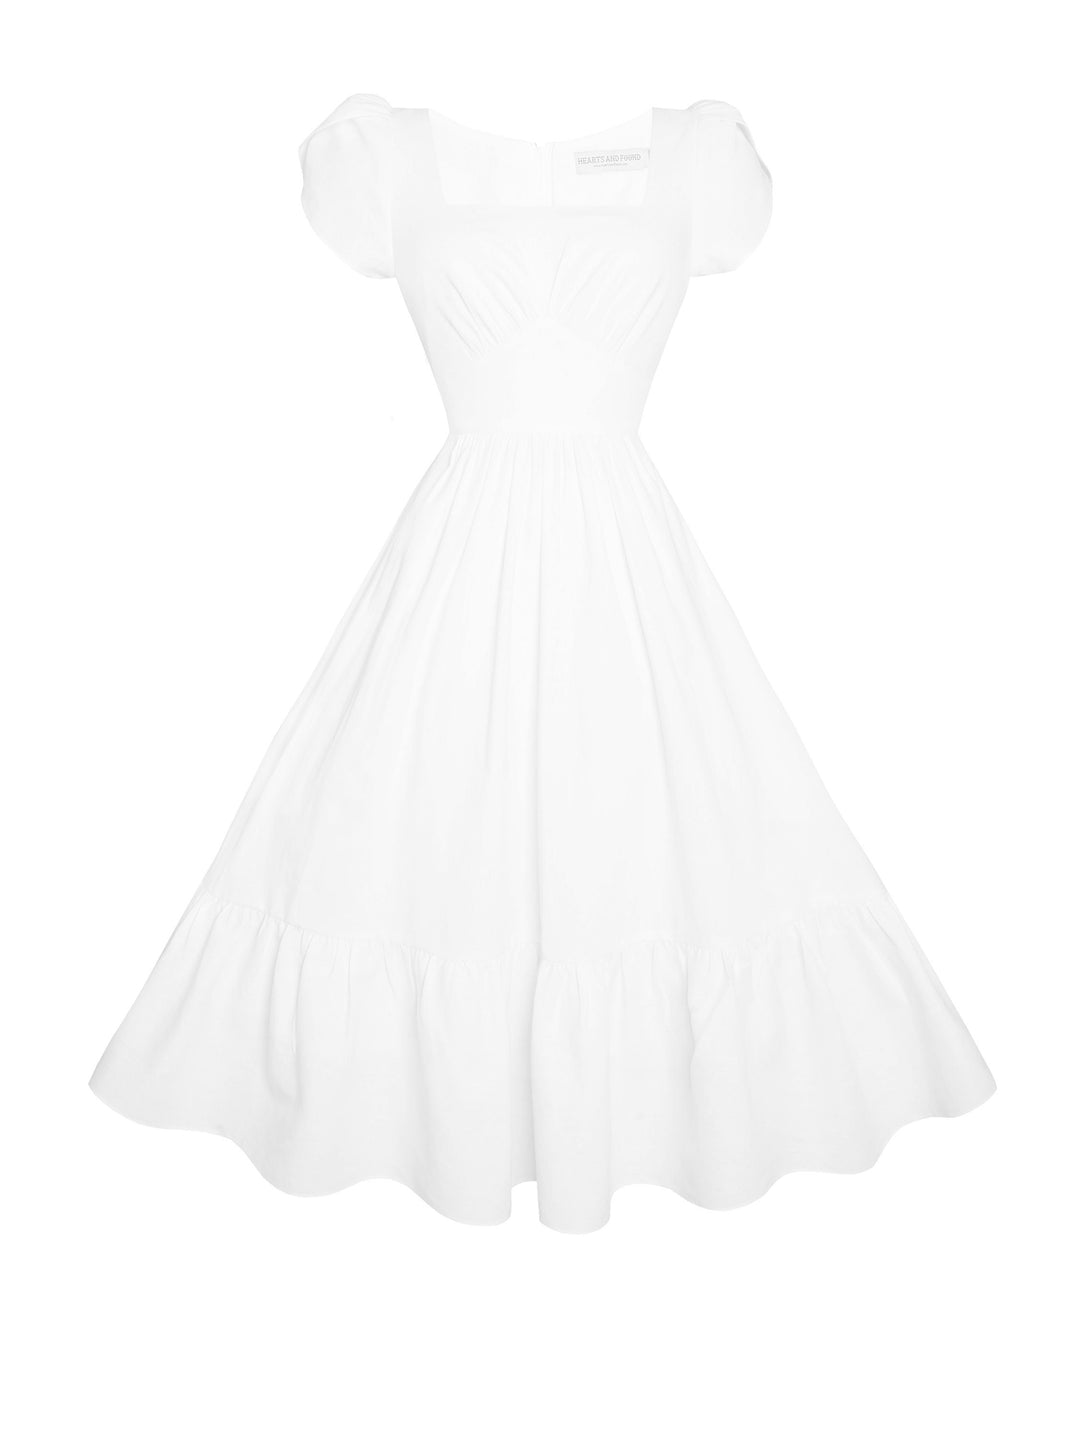 MTO - Ava Dress in White Linen